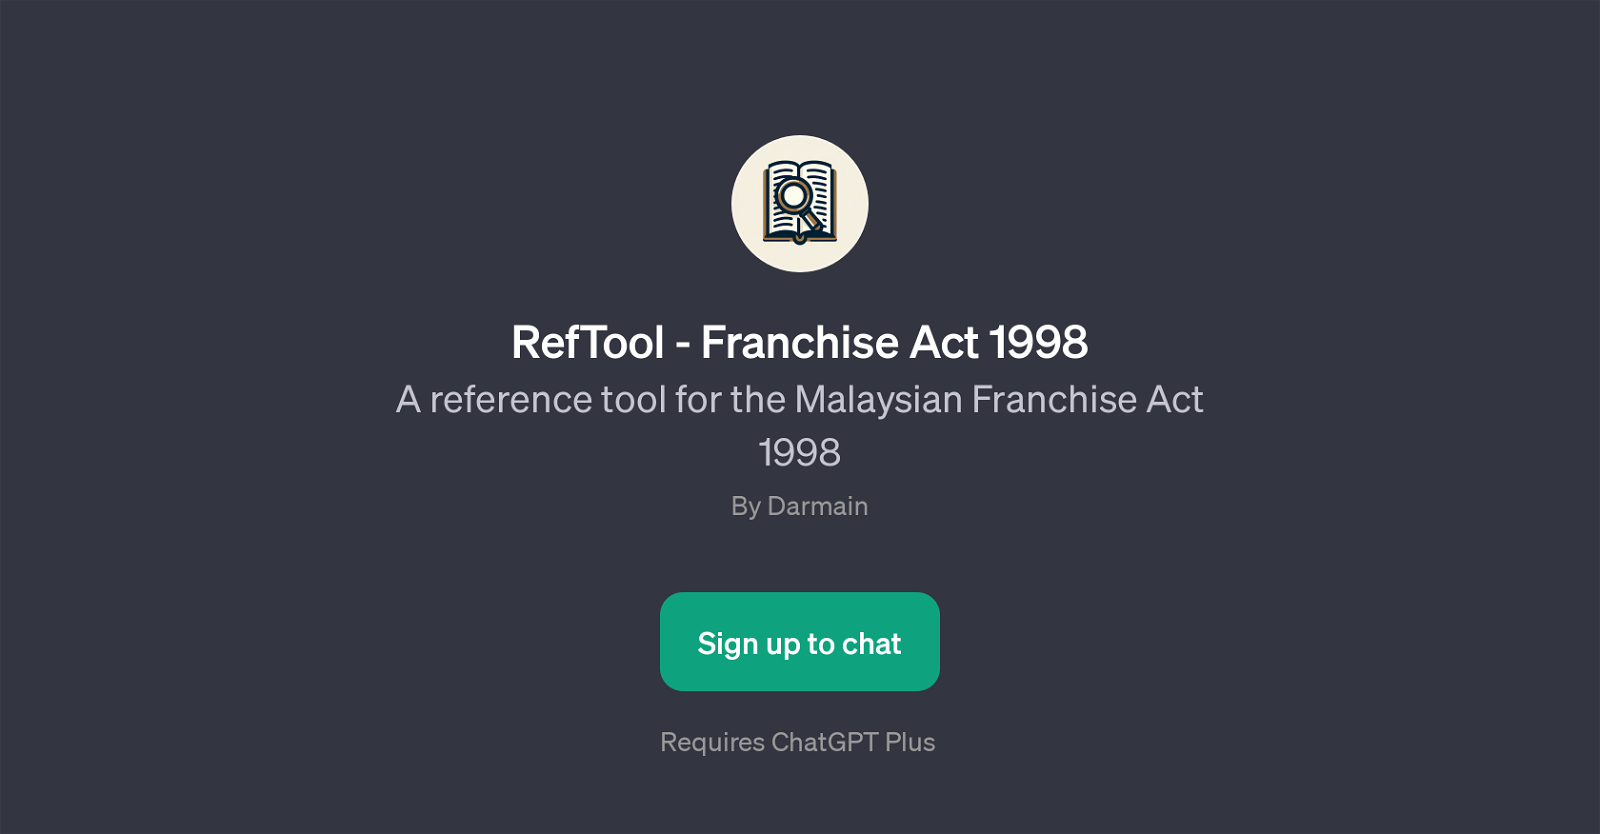 RefTool - Franchise Act 1998 website